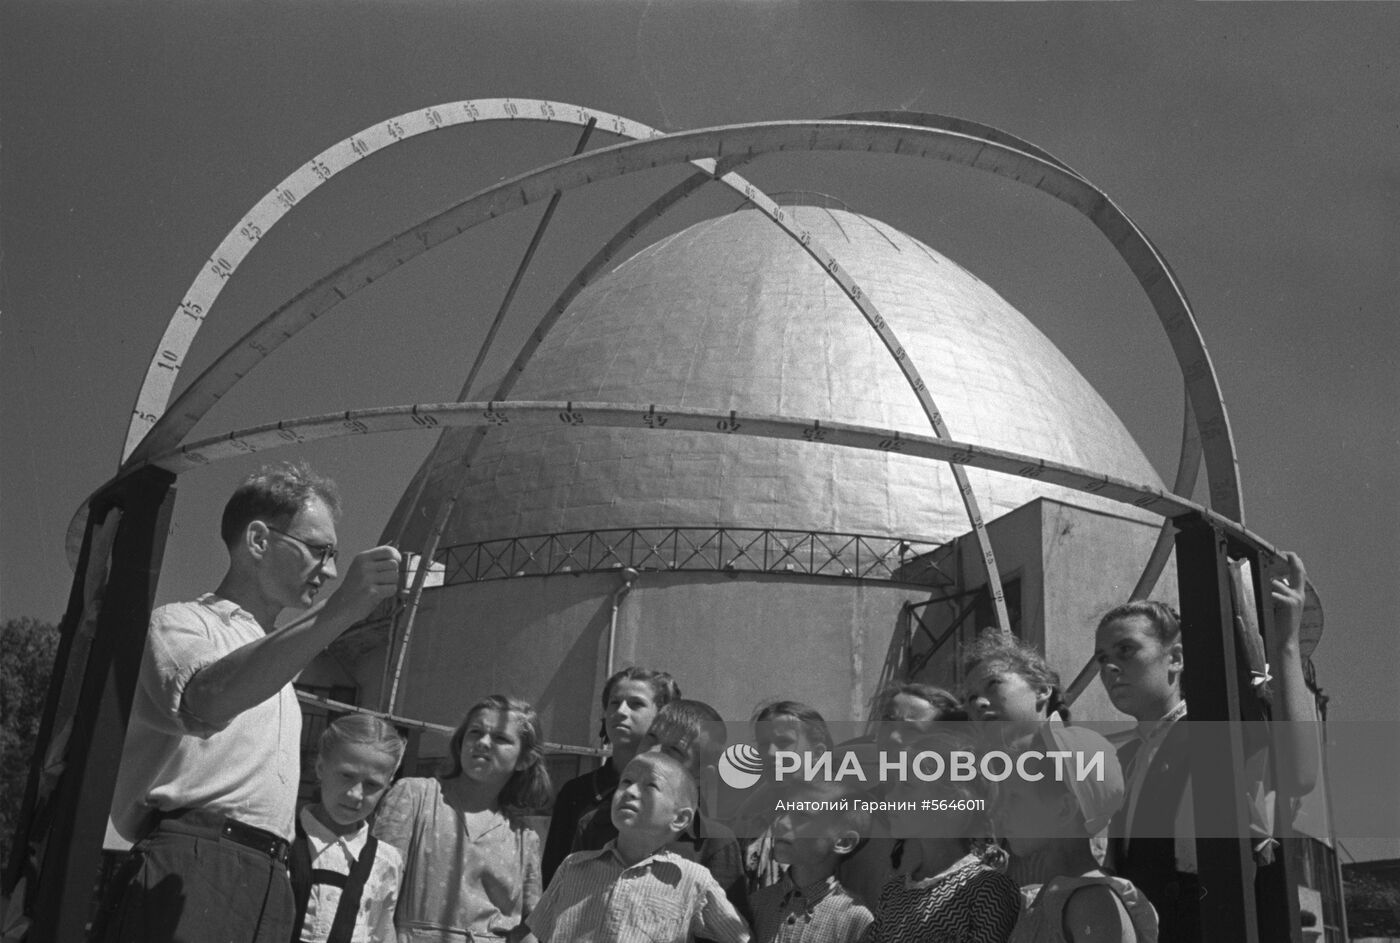 Московский планетарий